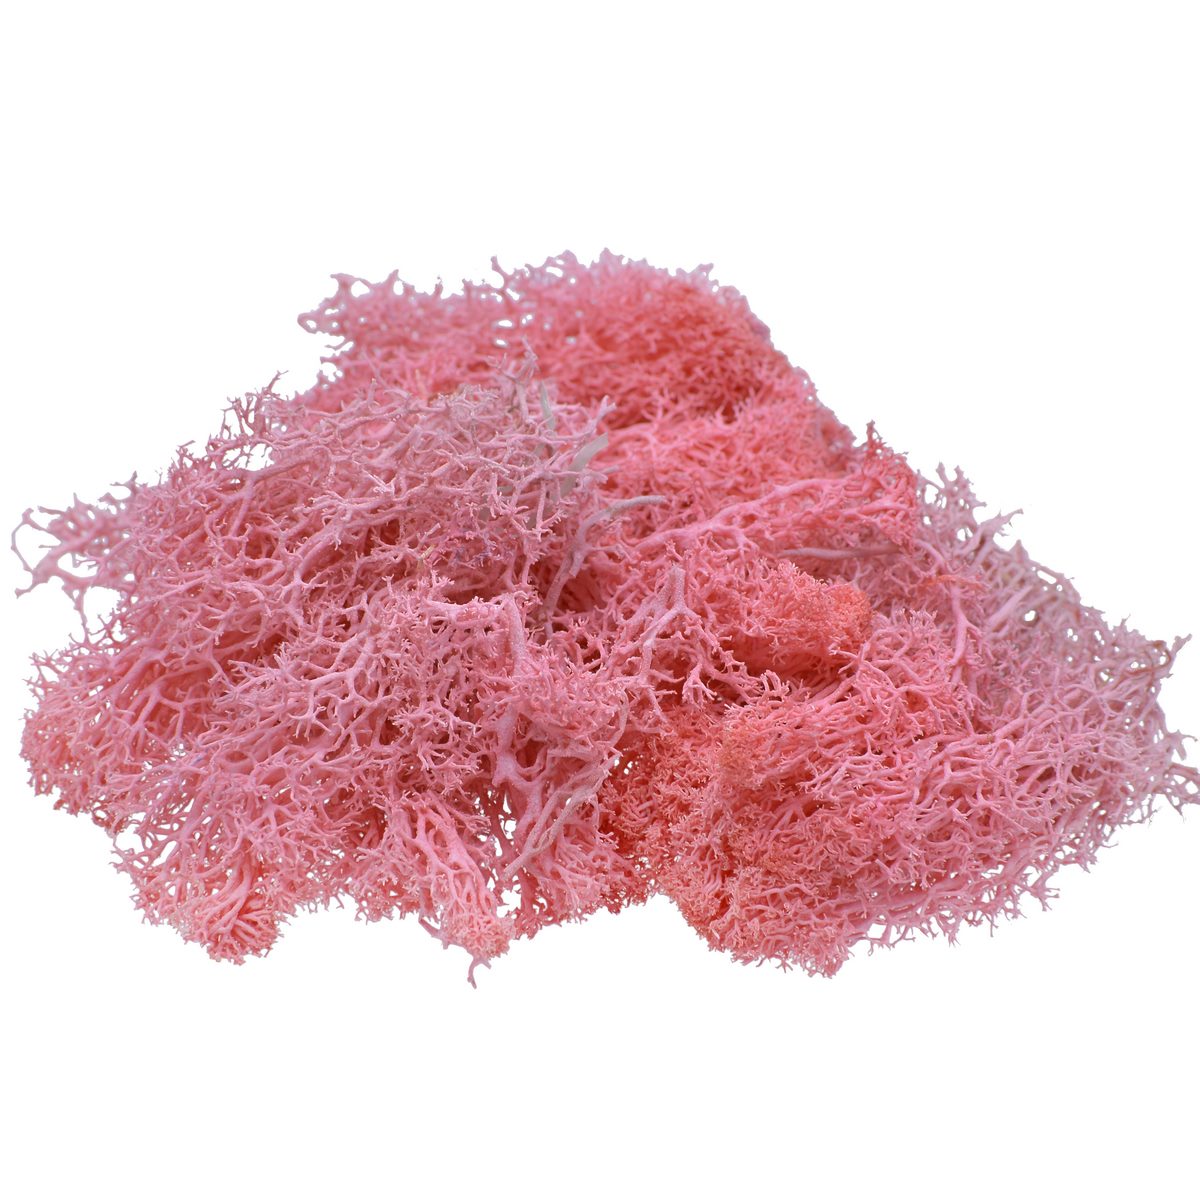 jags-mumbai Artificial Grass Jags Reindeer Moss 20 Grms Light Pink